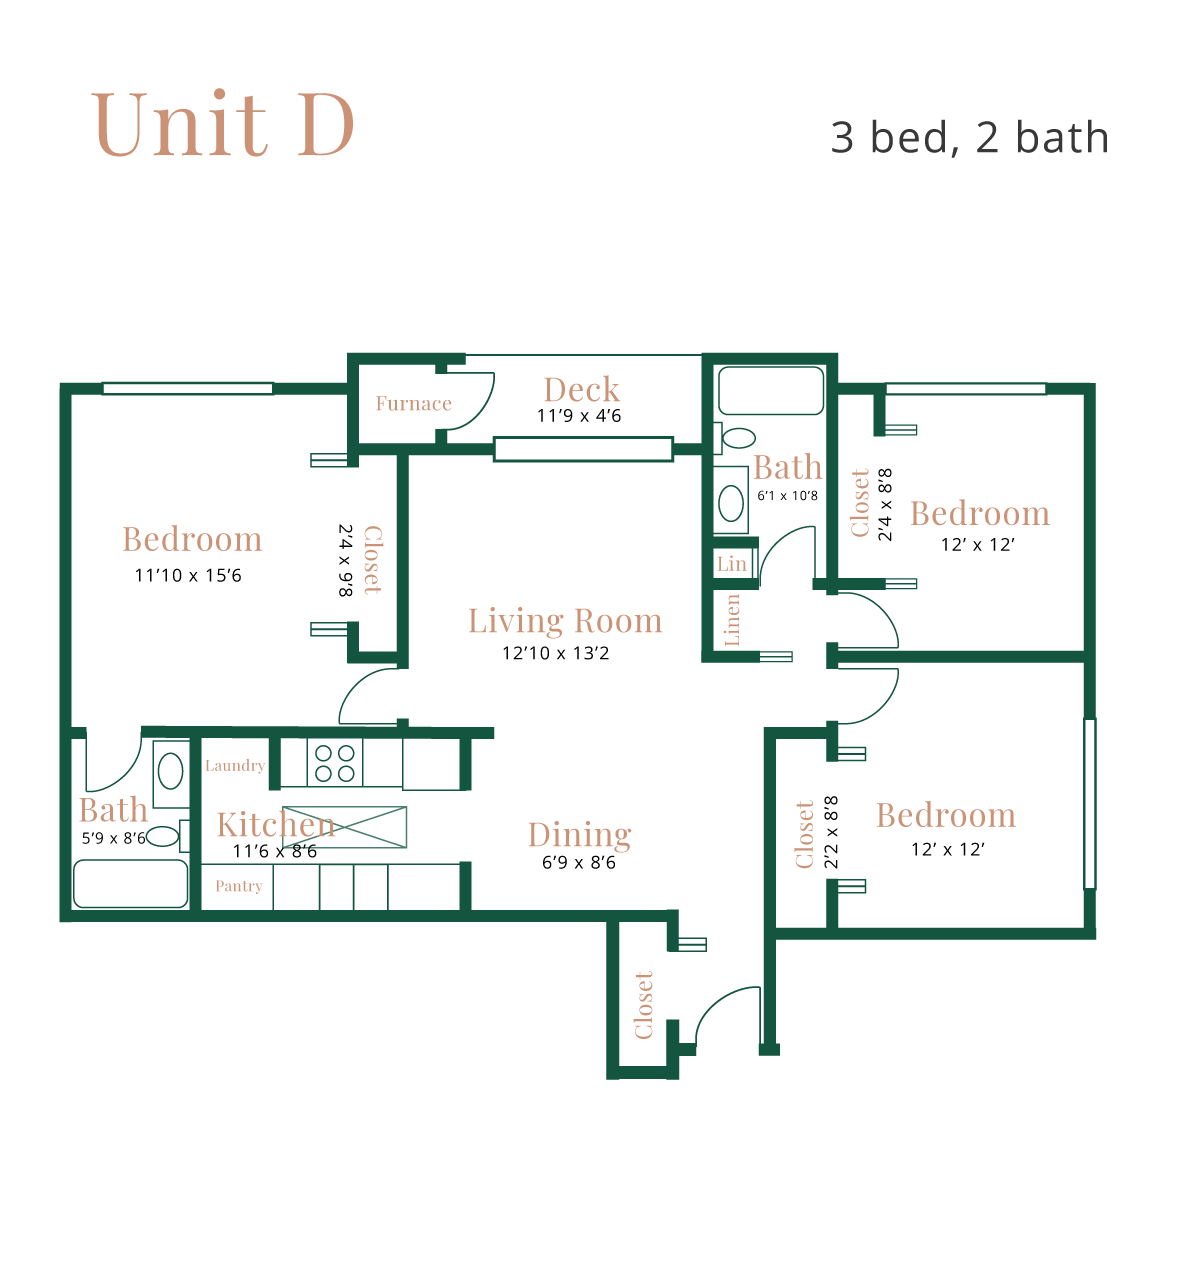 Unit D - 3 bed, 2 bath